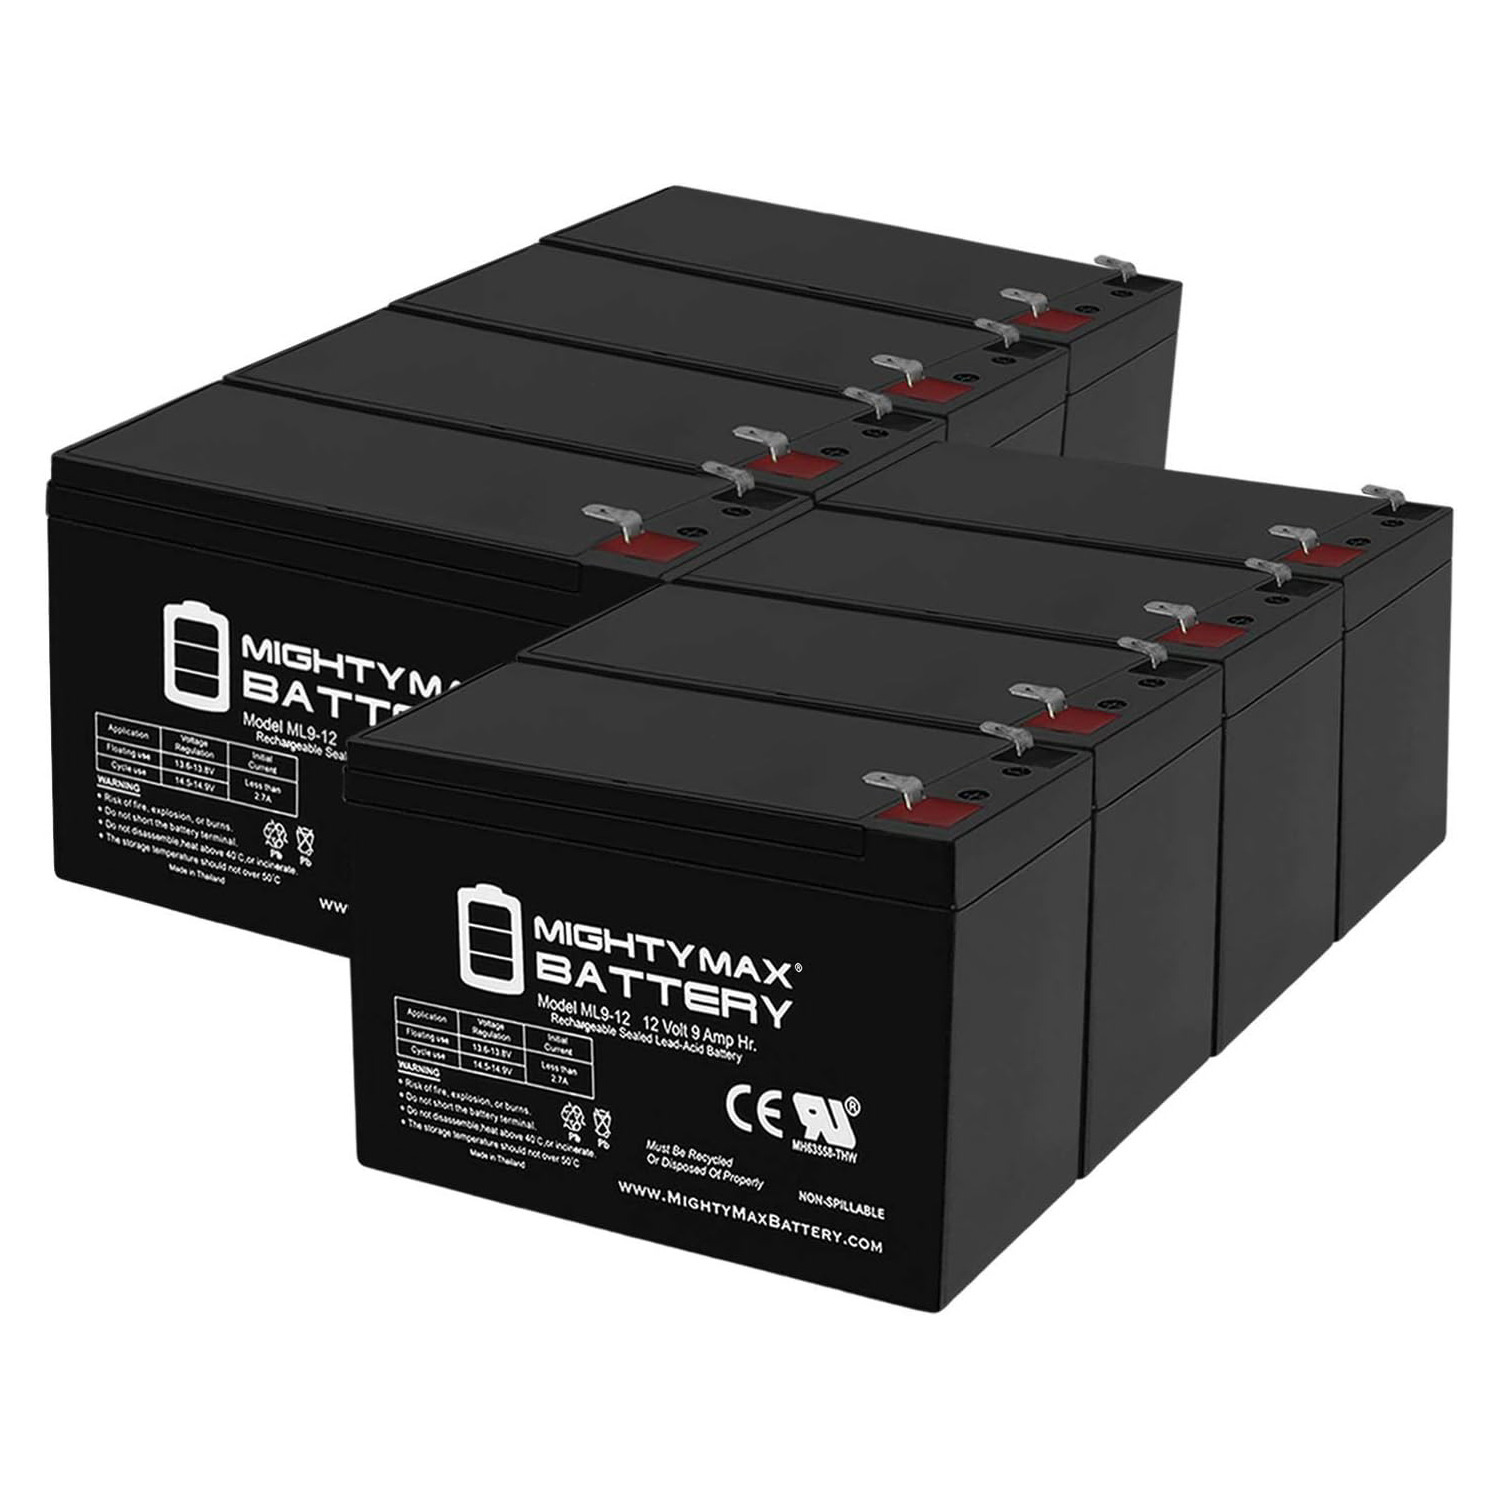 Altronix SMP3PMP16 12V, 9Ah Lead Acid Battery - 8 Pack